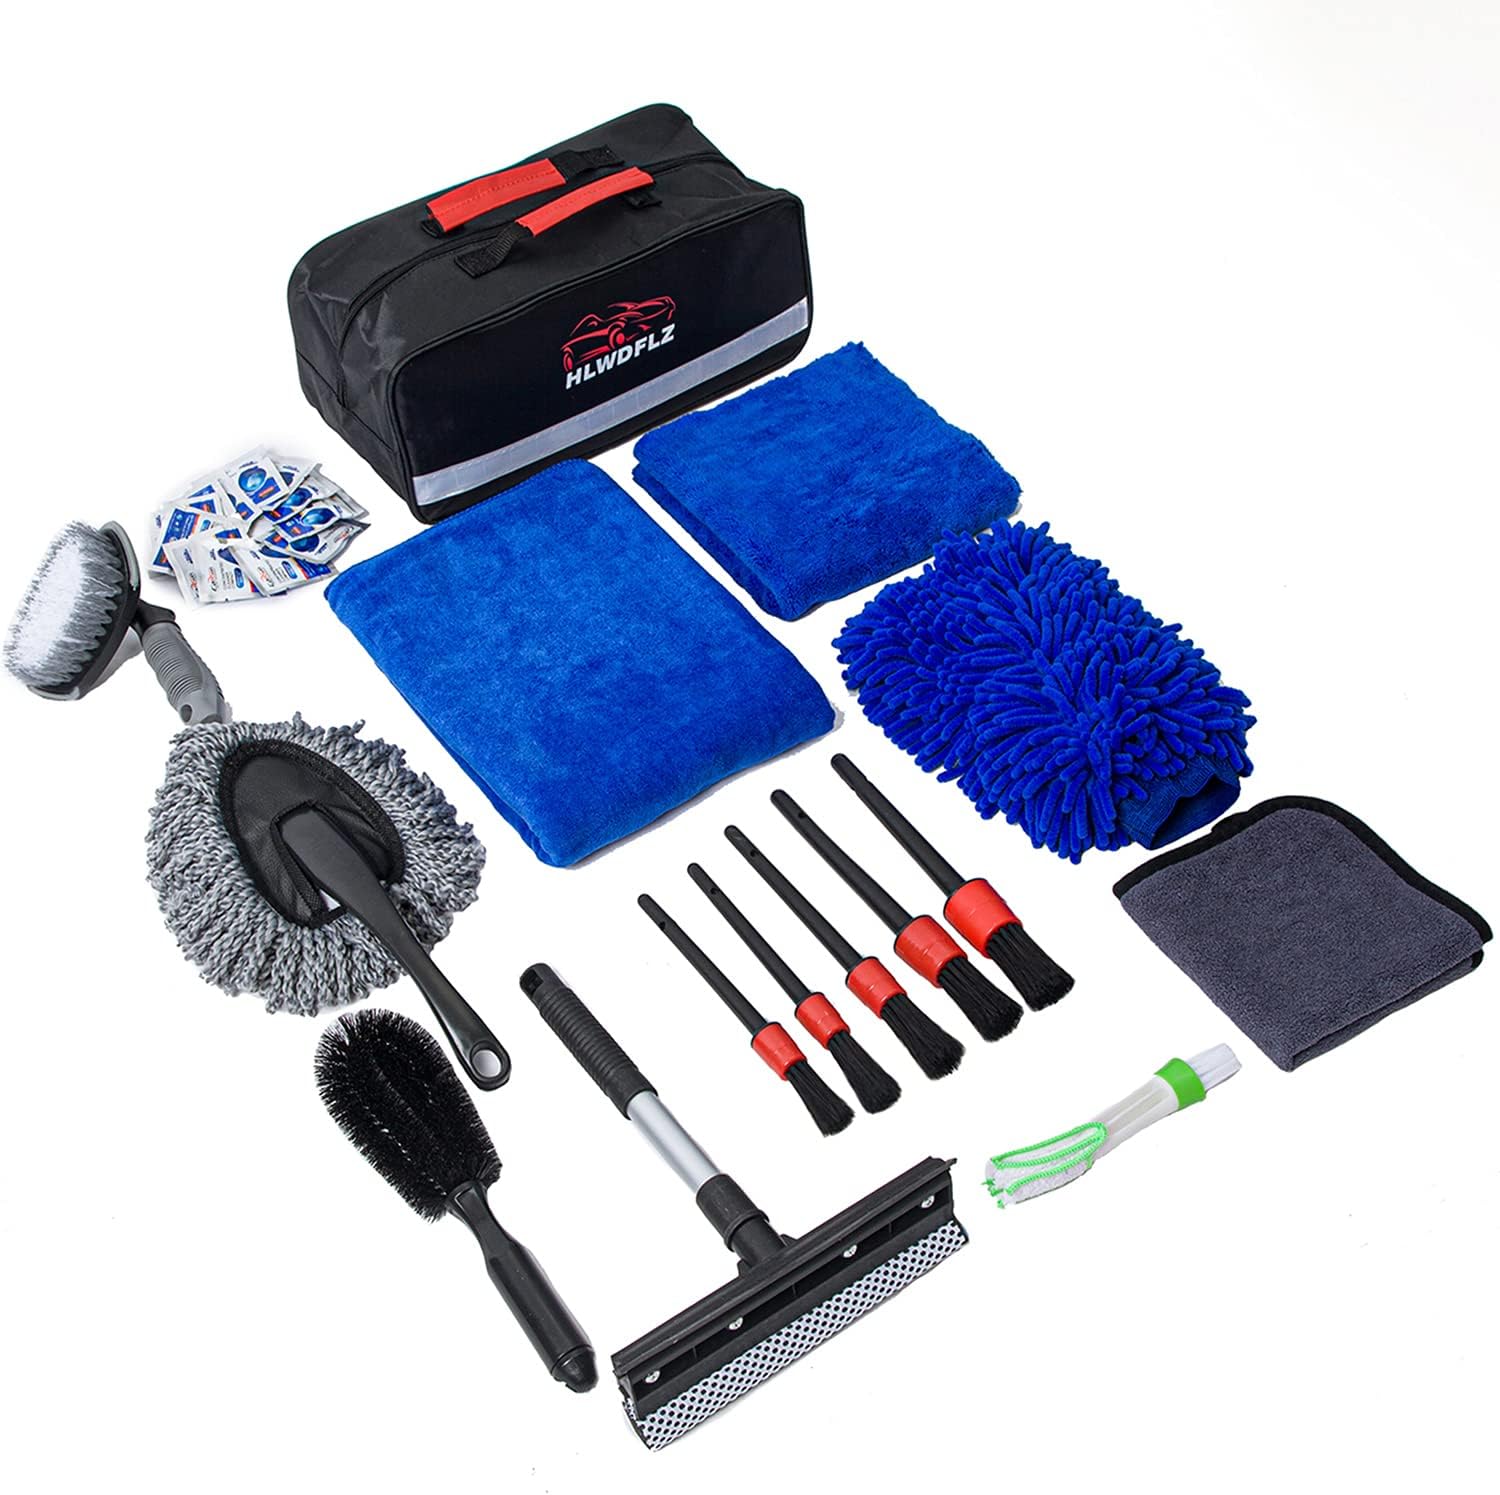 HLWDFLZ 27pcs Car Wash Cleaning Tools Kit Car Detailing Set - Blue Car Wash Kit Interior and Exterior with Car Detail Brushes, Tire Bru